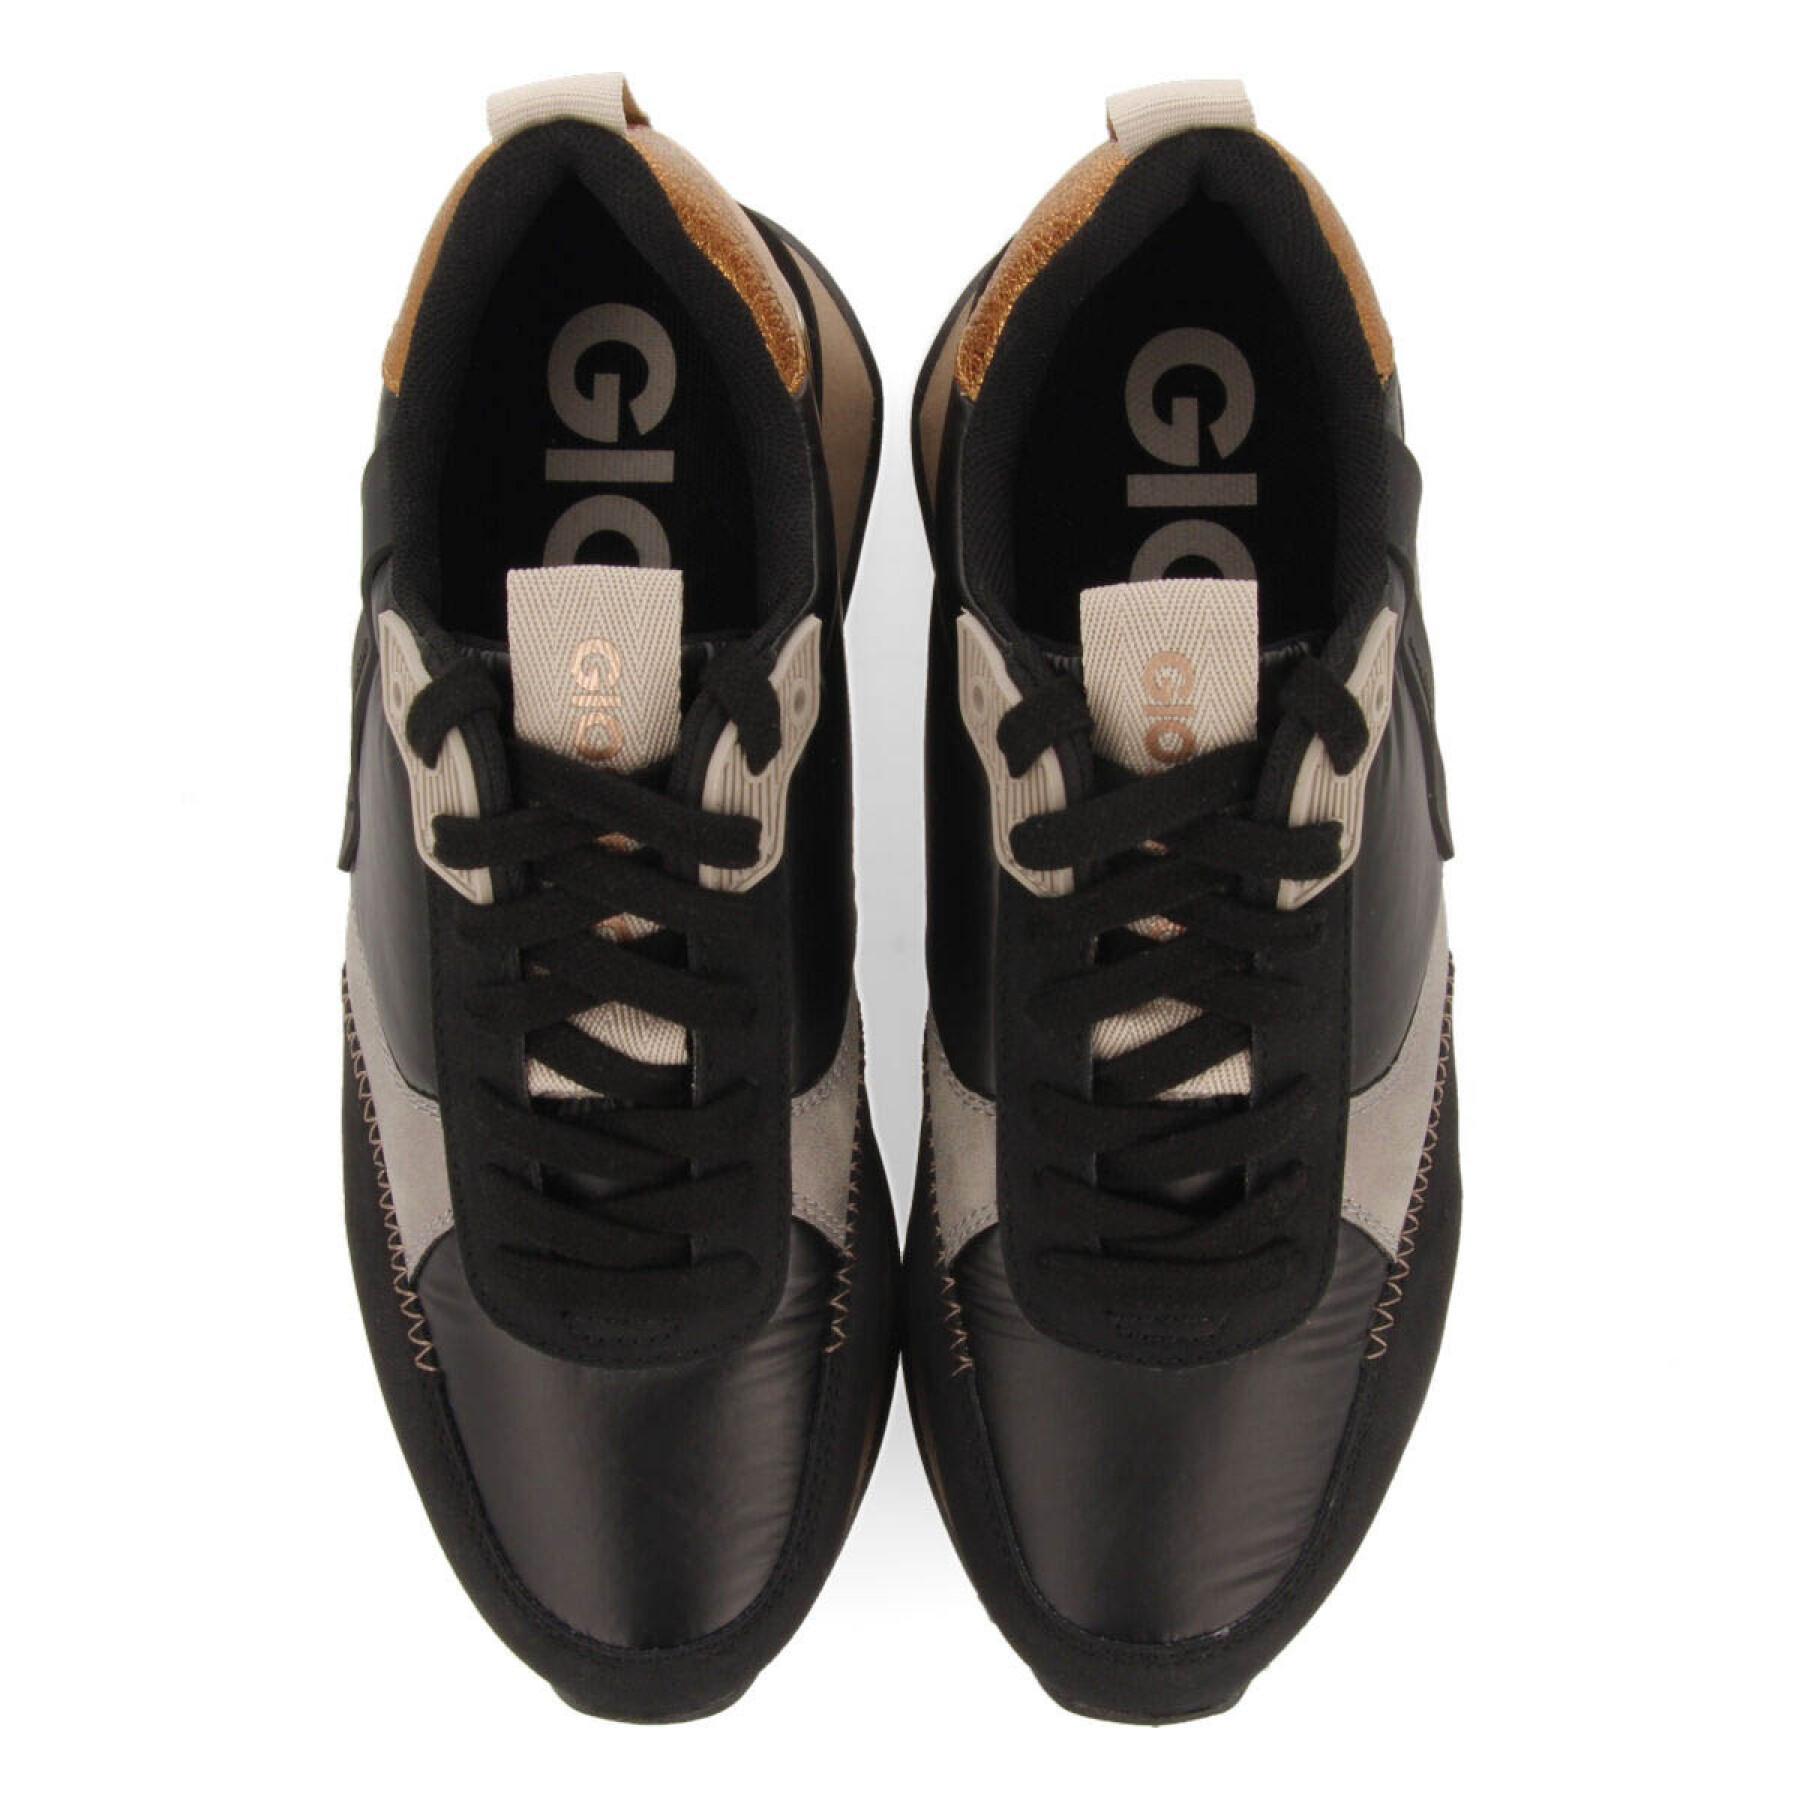 Sneakers für Frauen Gioseppo Gladsaxe